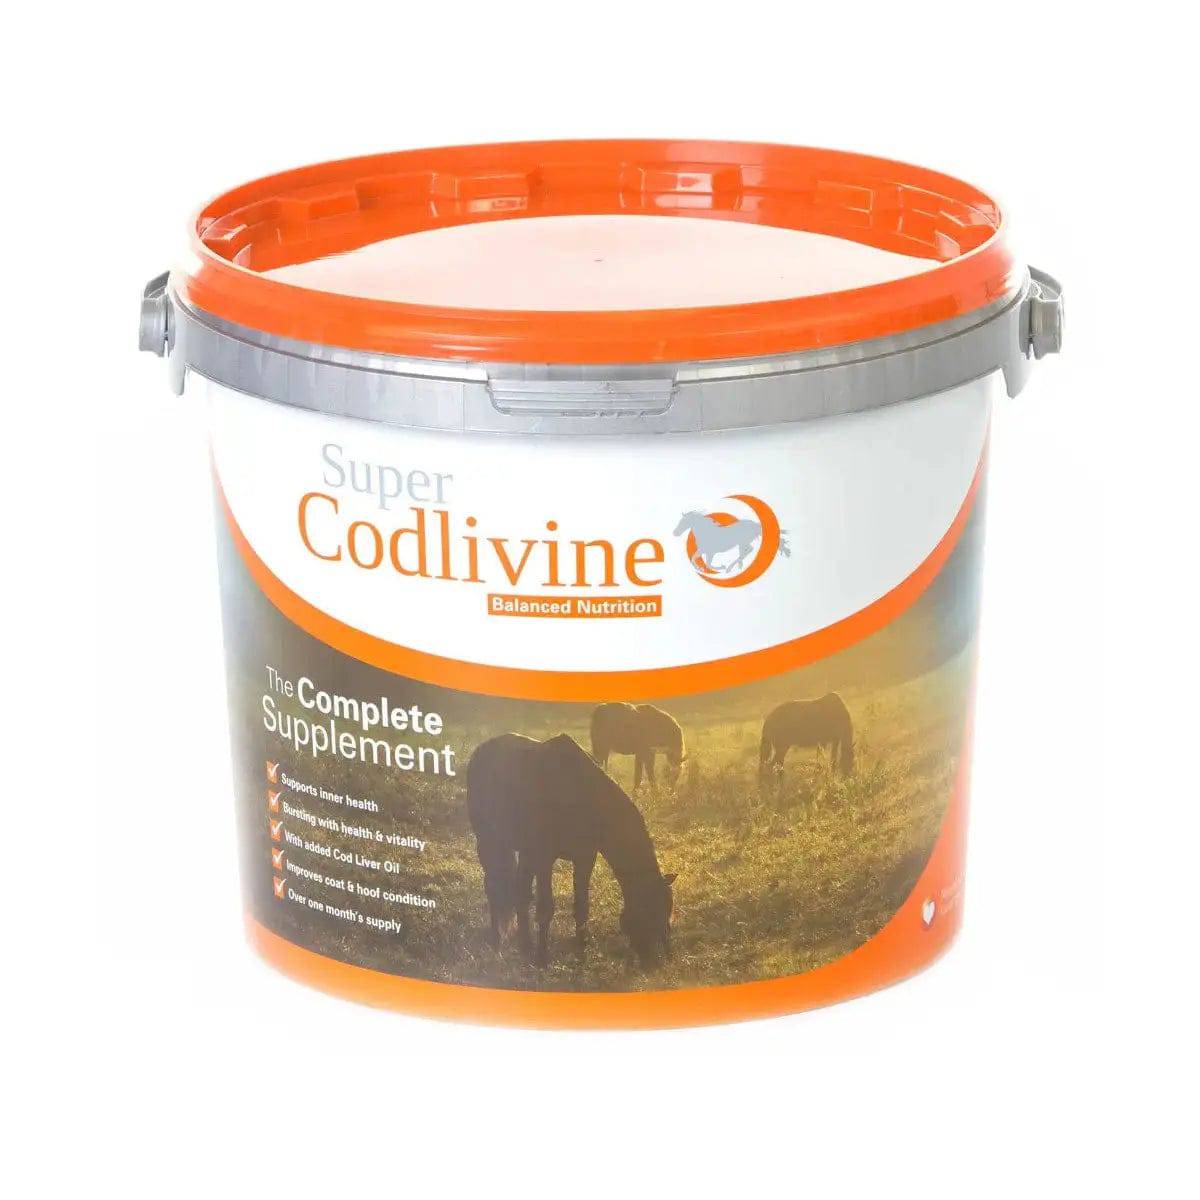 Super Codlivine The Complete Supplement 2.5kg Super Supplement Horse Supplements Barnstaple Equestrian Supplies